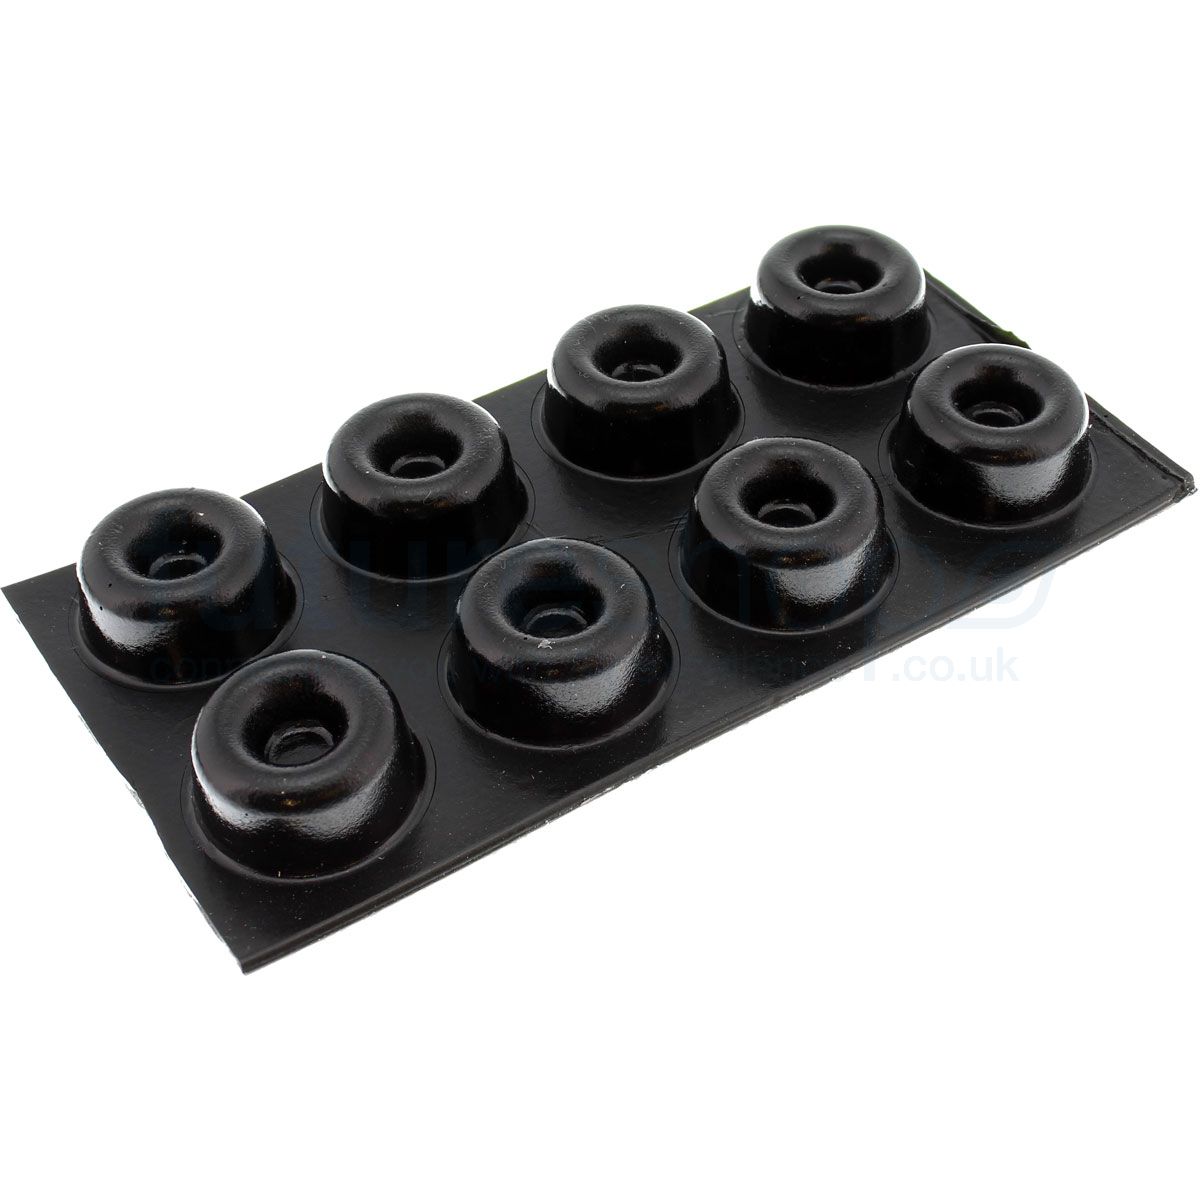 8x Speakers & Speaker Stand Protectors BLACK Isolation Gel Pads 